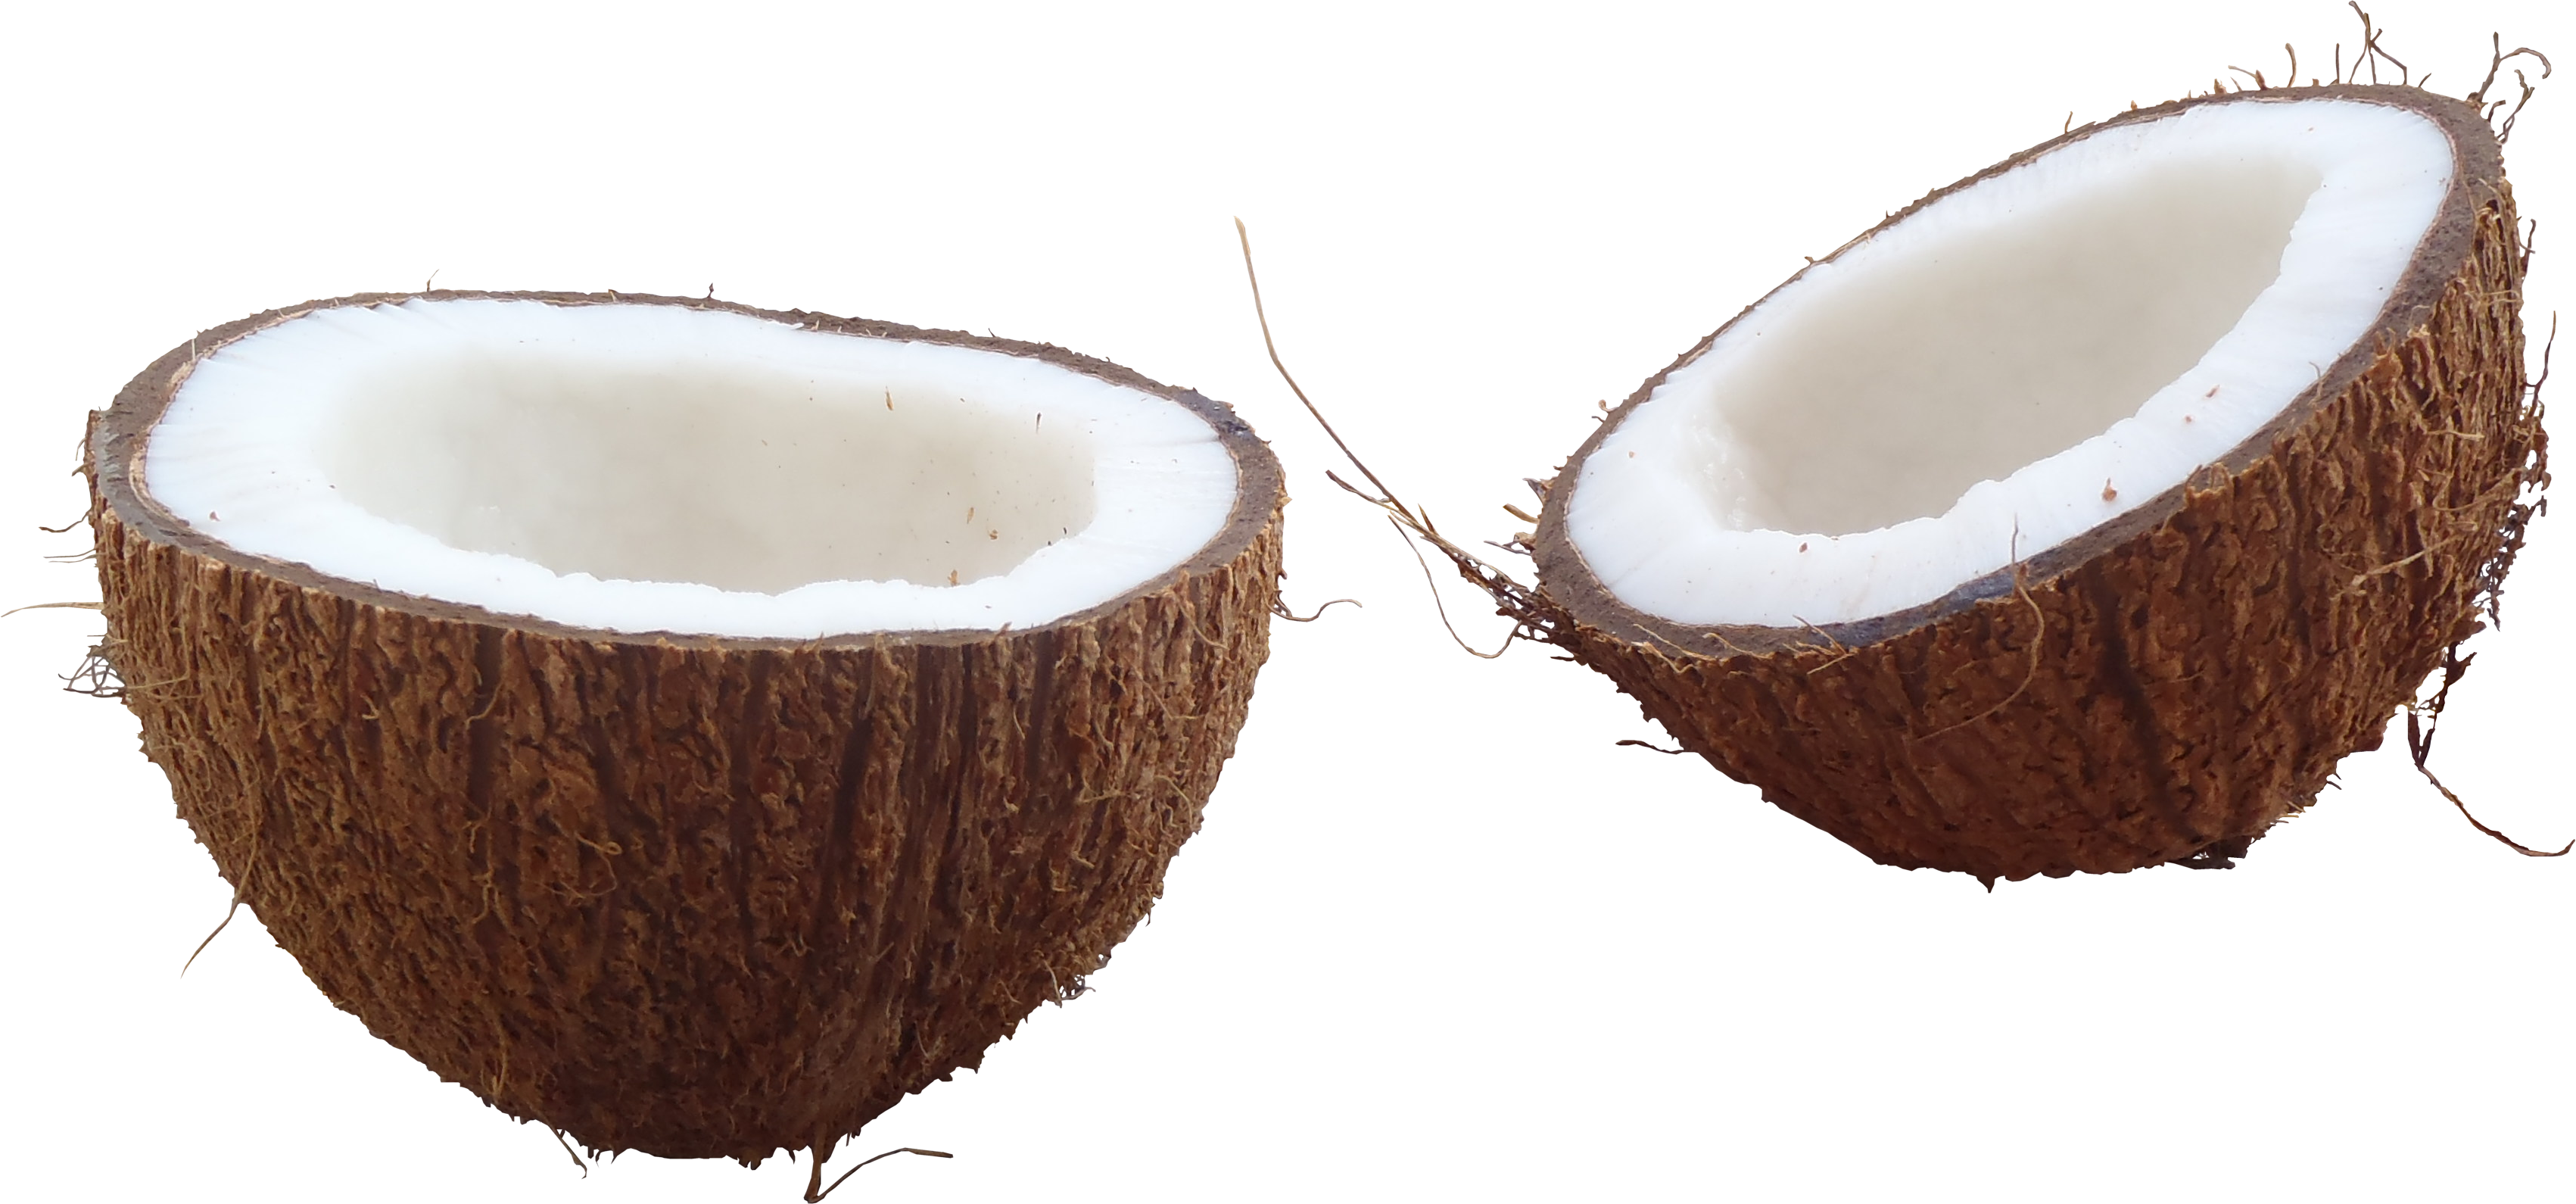 Half Coconut Image Download Free Image PNG Image